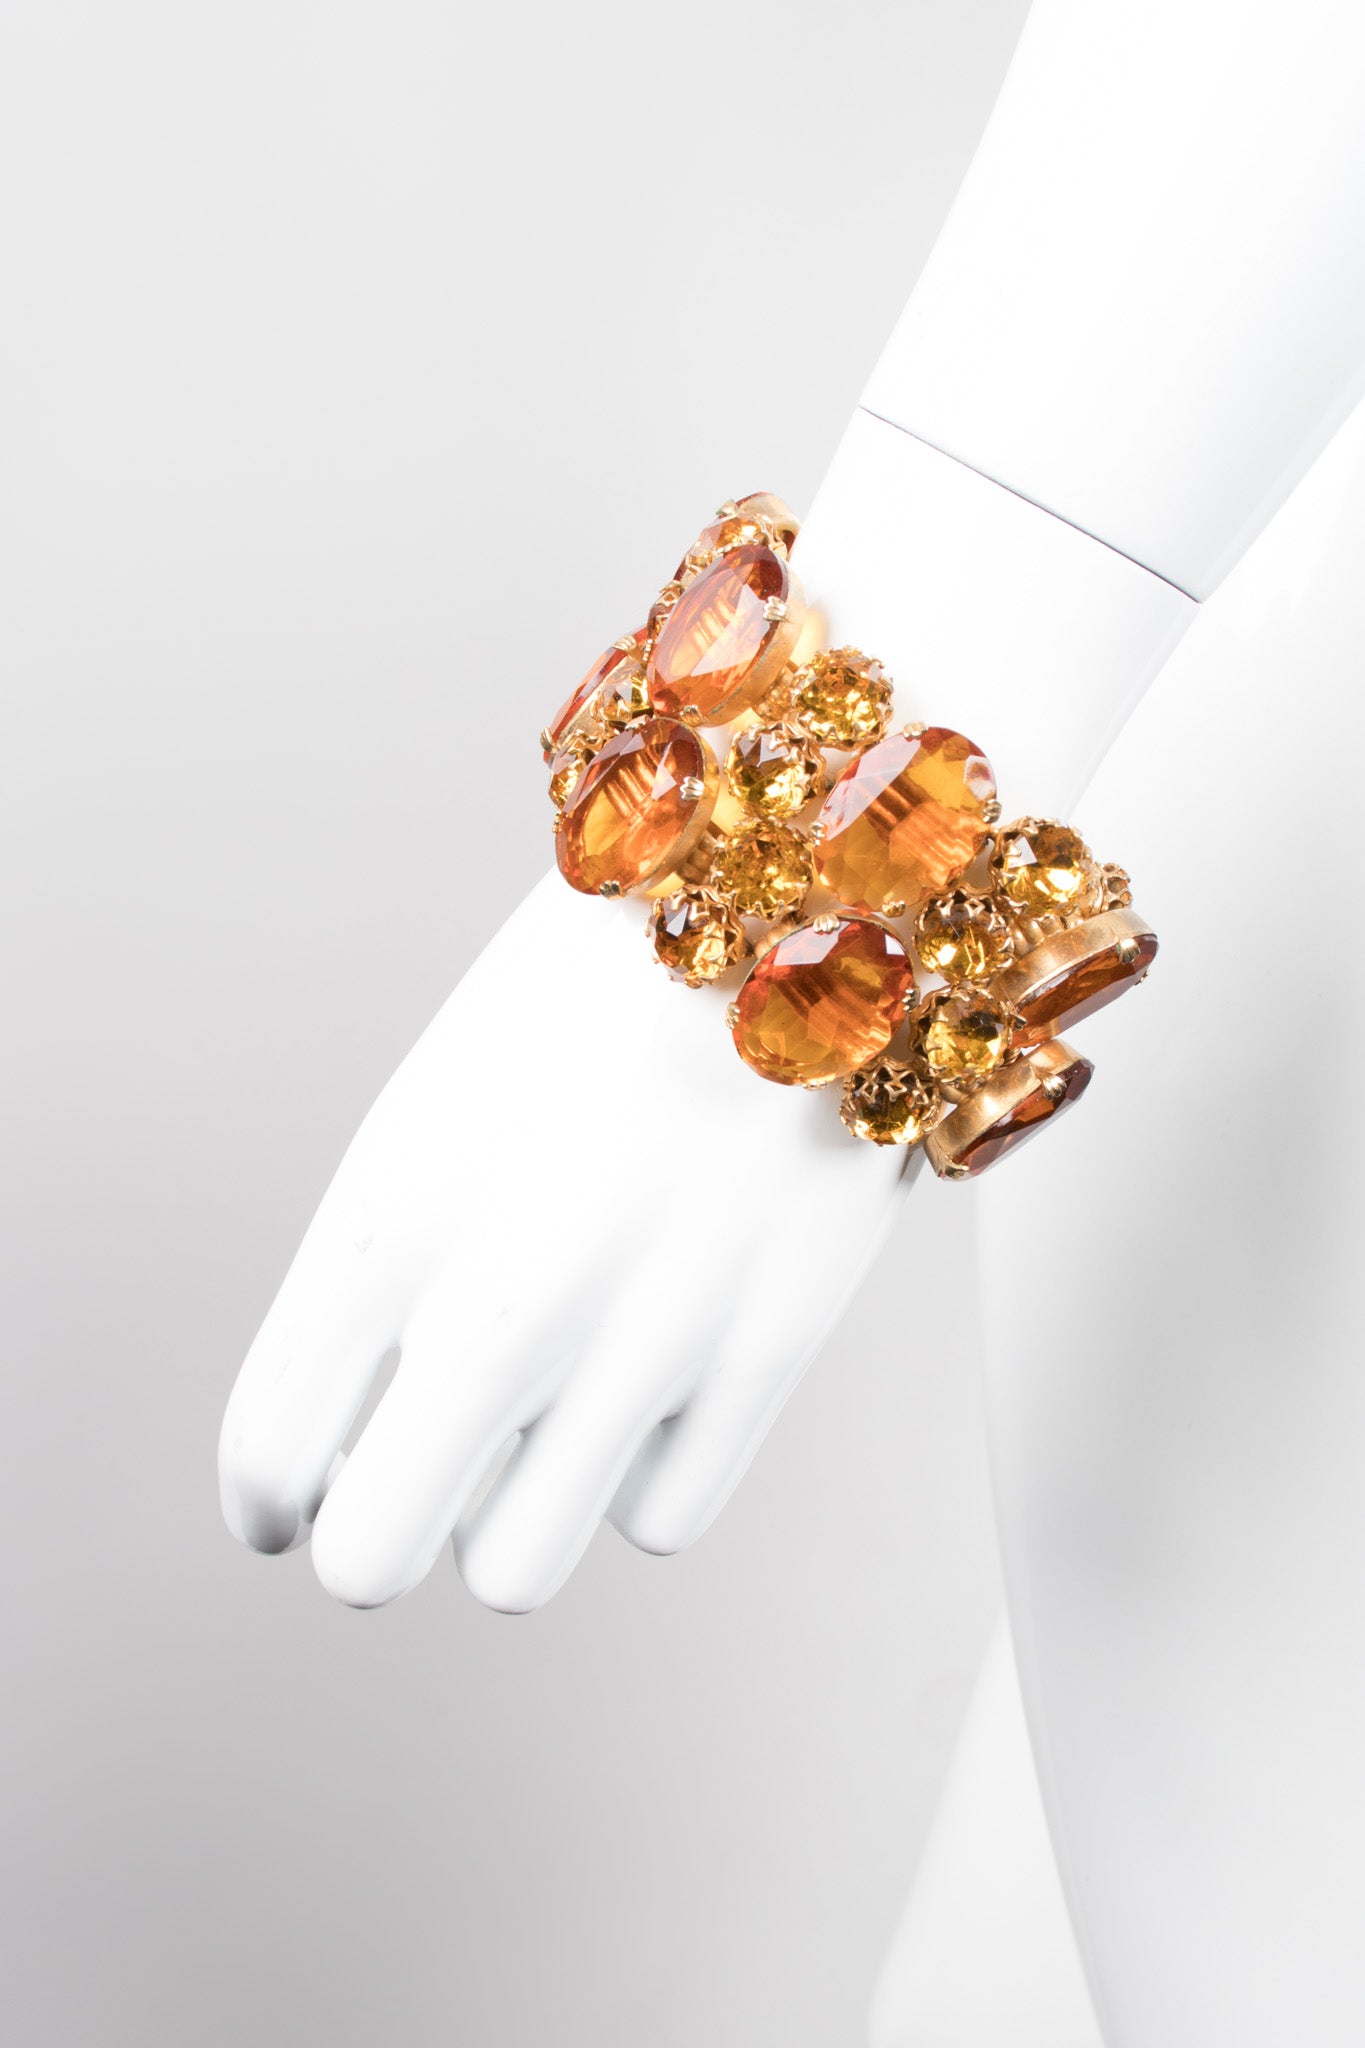 Vintage 60s Amber Crystal Jeweled Bracelet